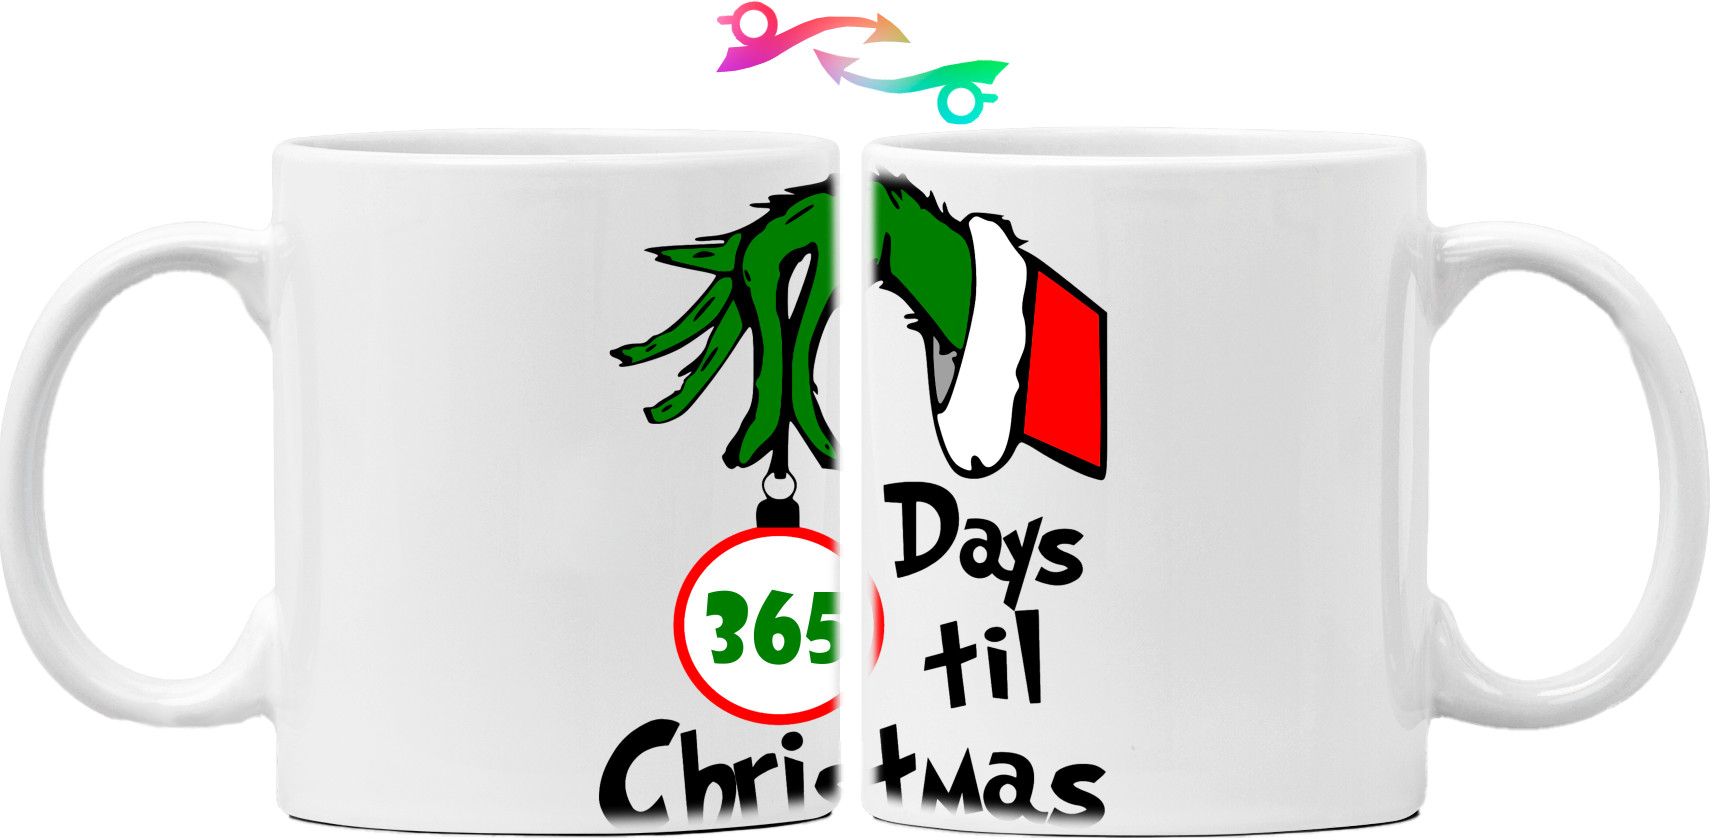 365 days til Christmas